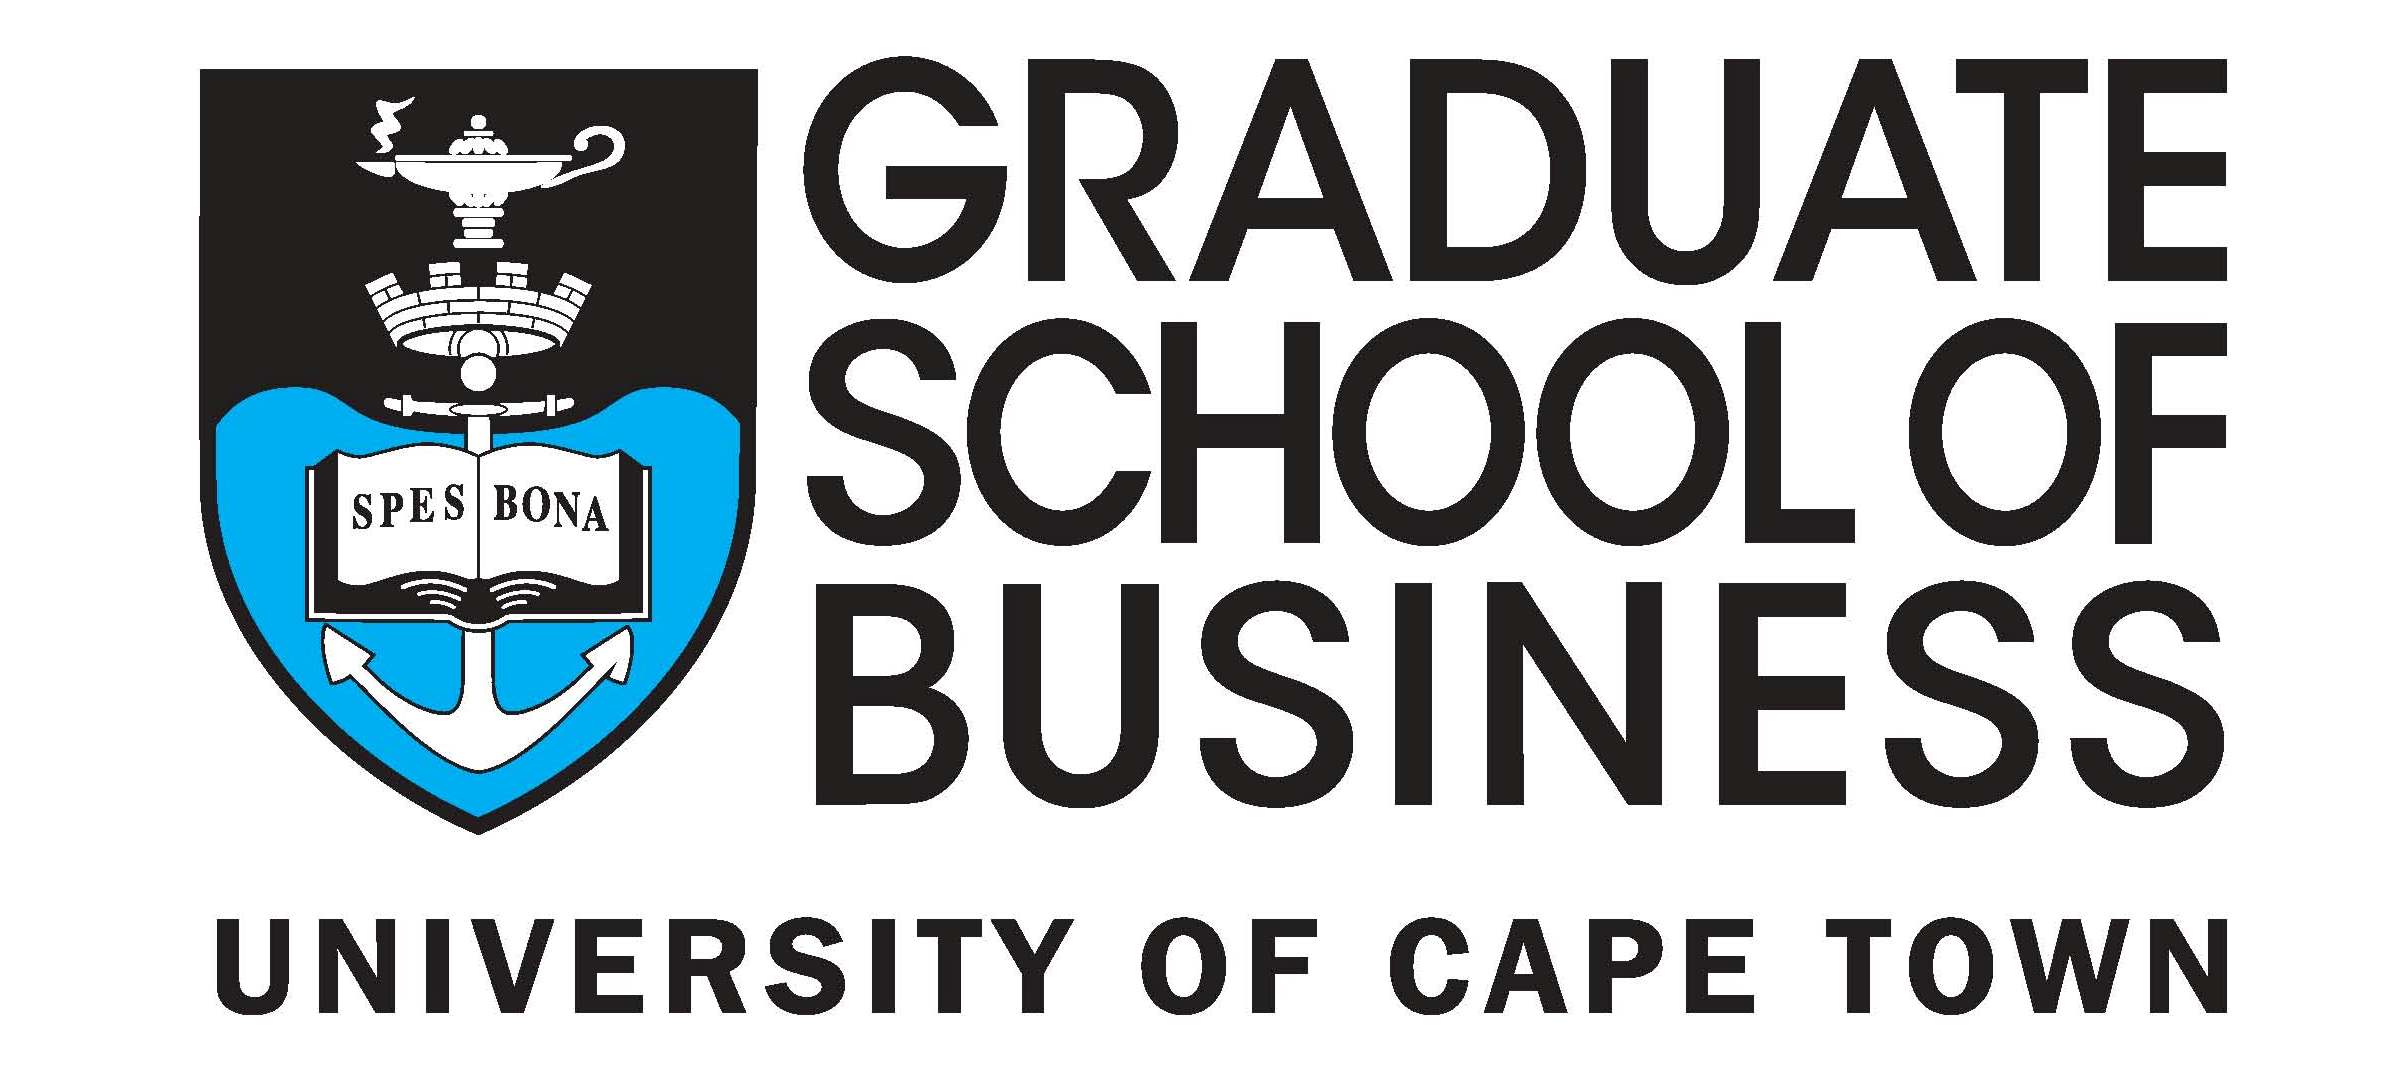 University of Cape Town, Graduate School of Business